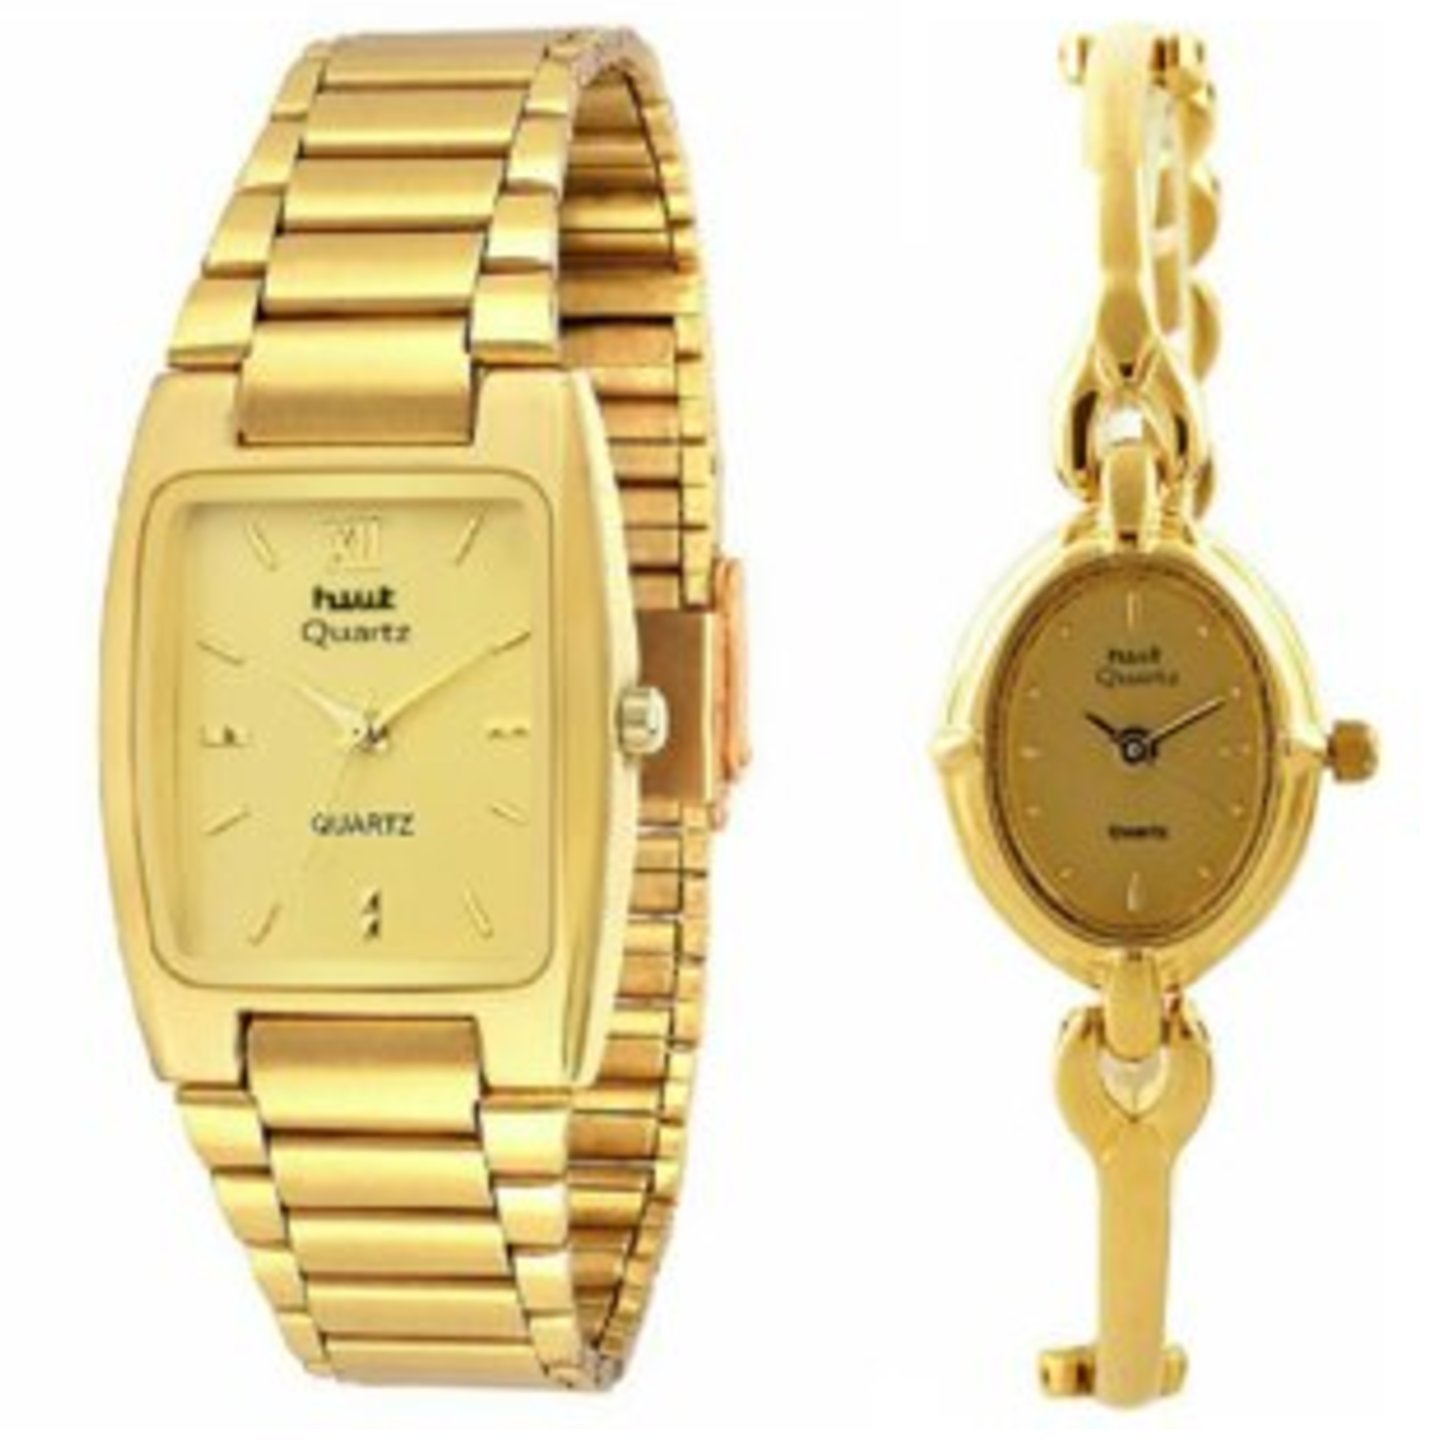 HWT Gold Metal Couple Watch Combo